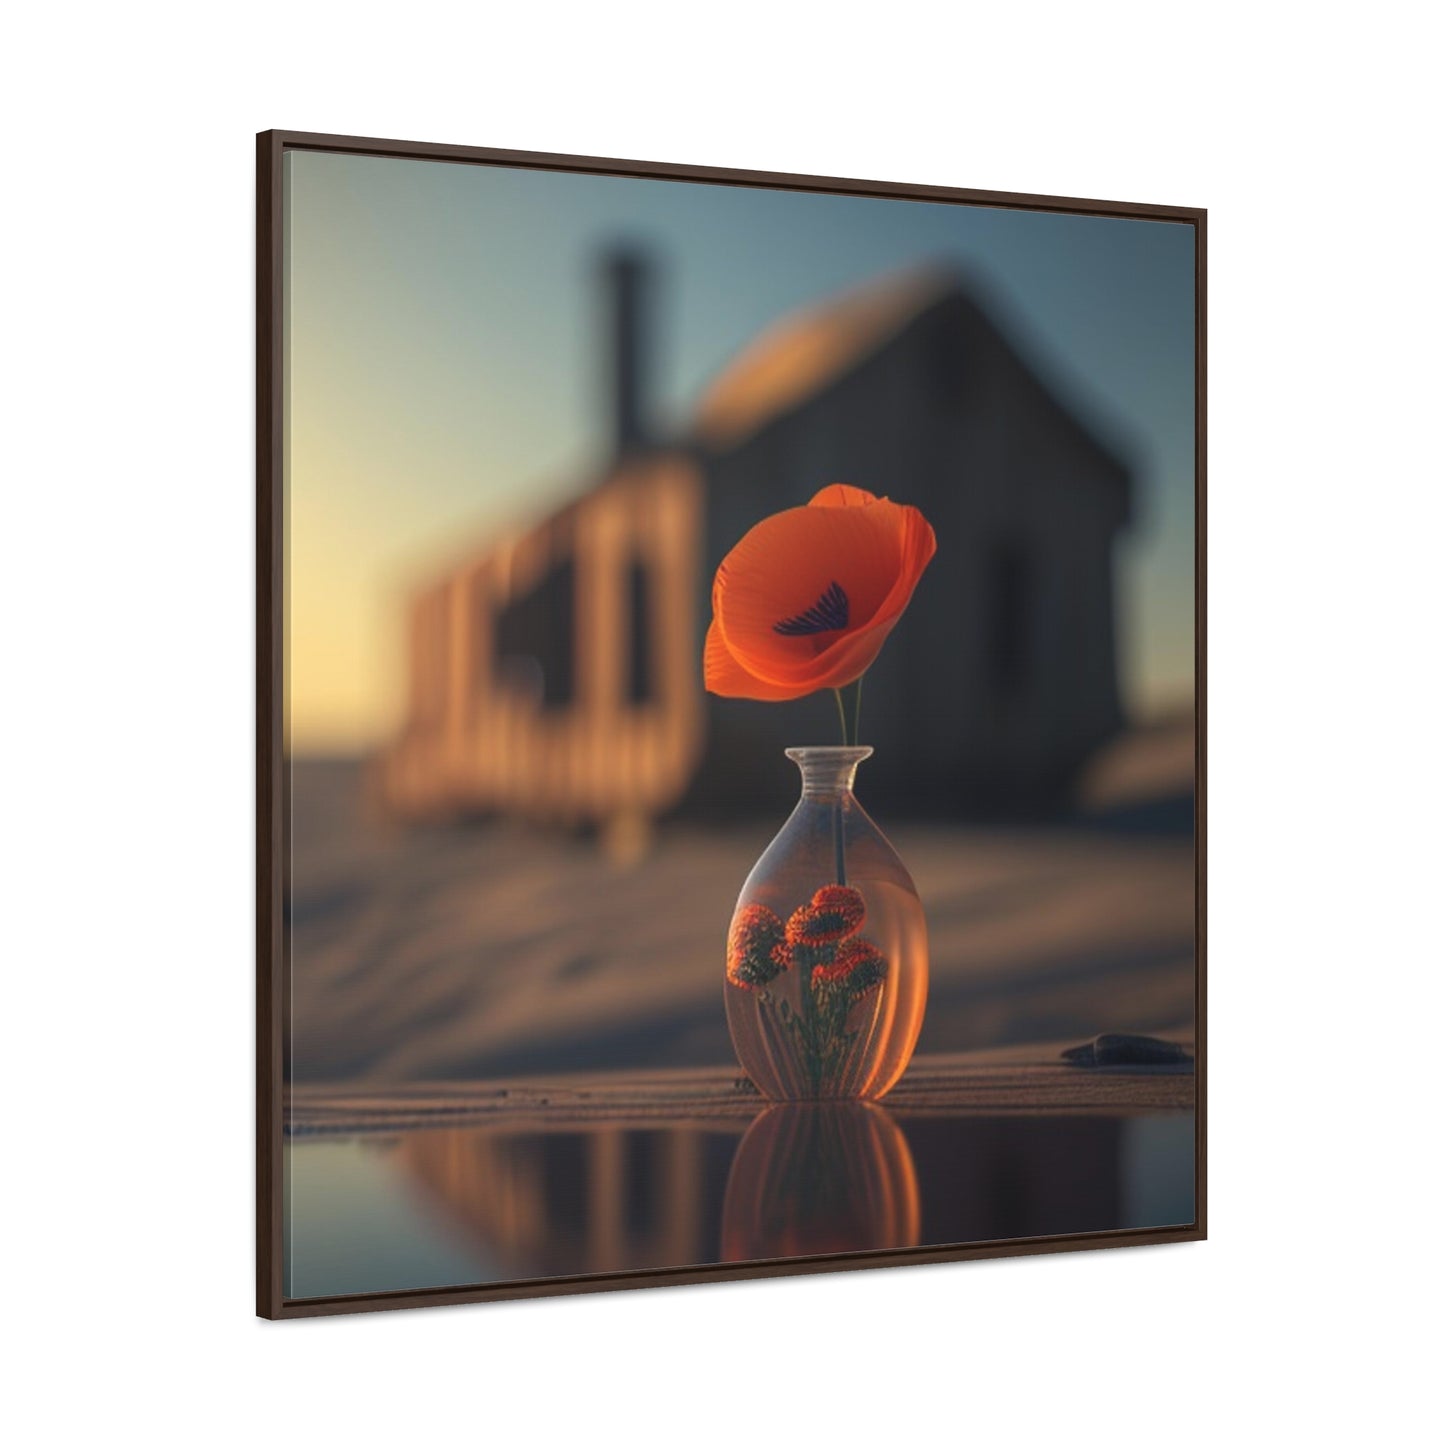 Gallery Canvas Wraps, Square Frame Orange Poppy in a Vase 3